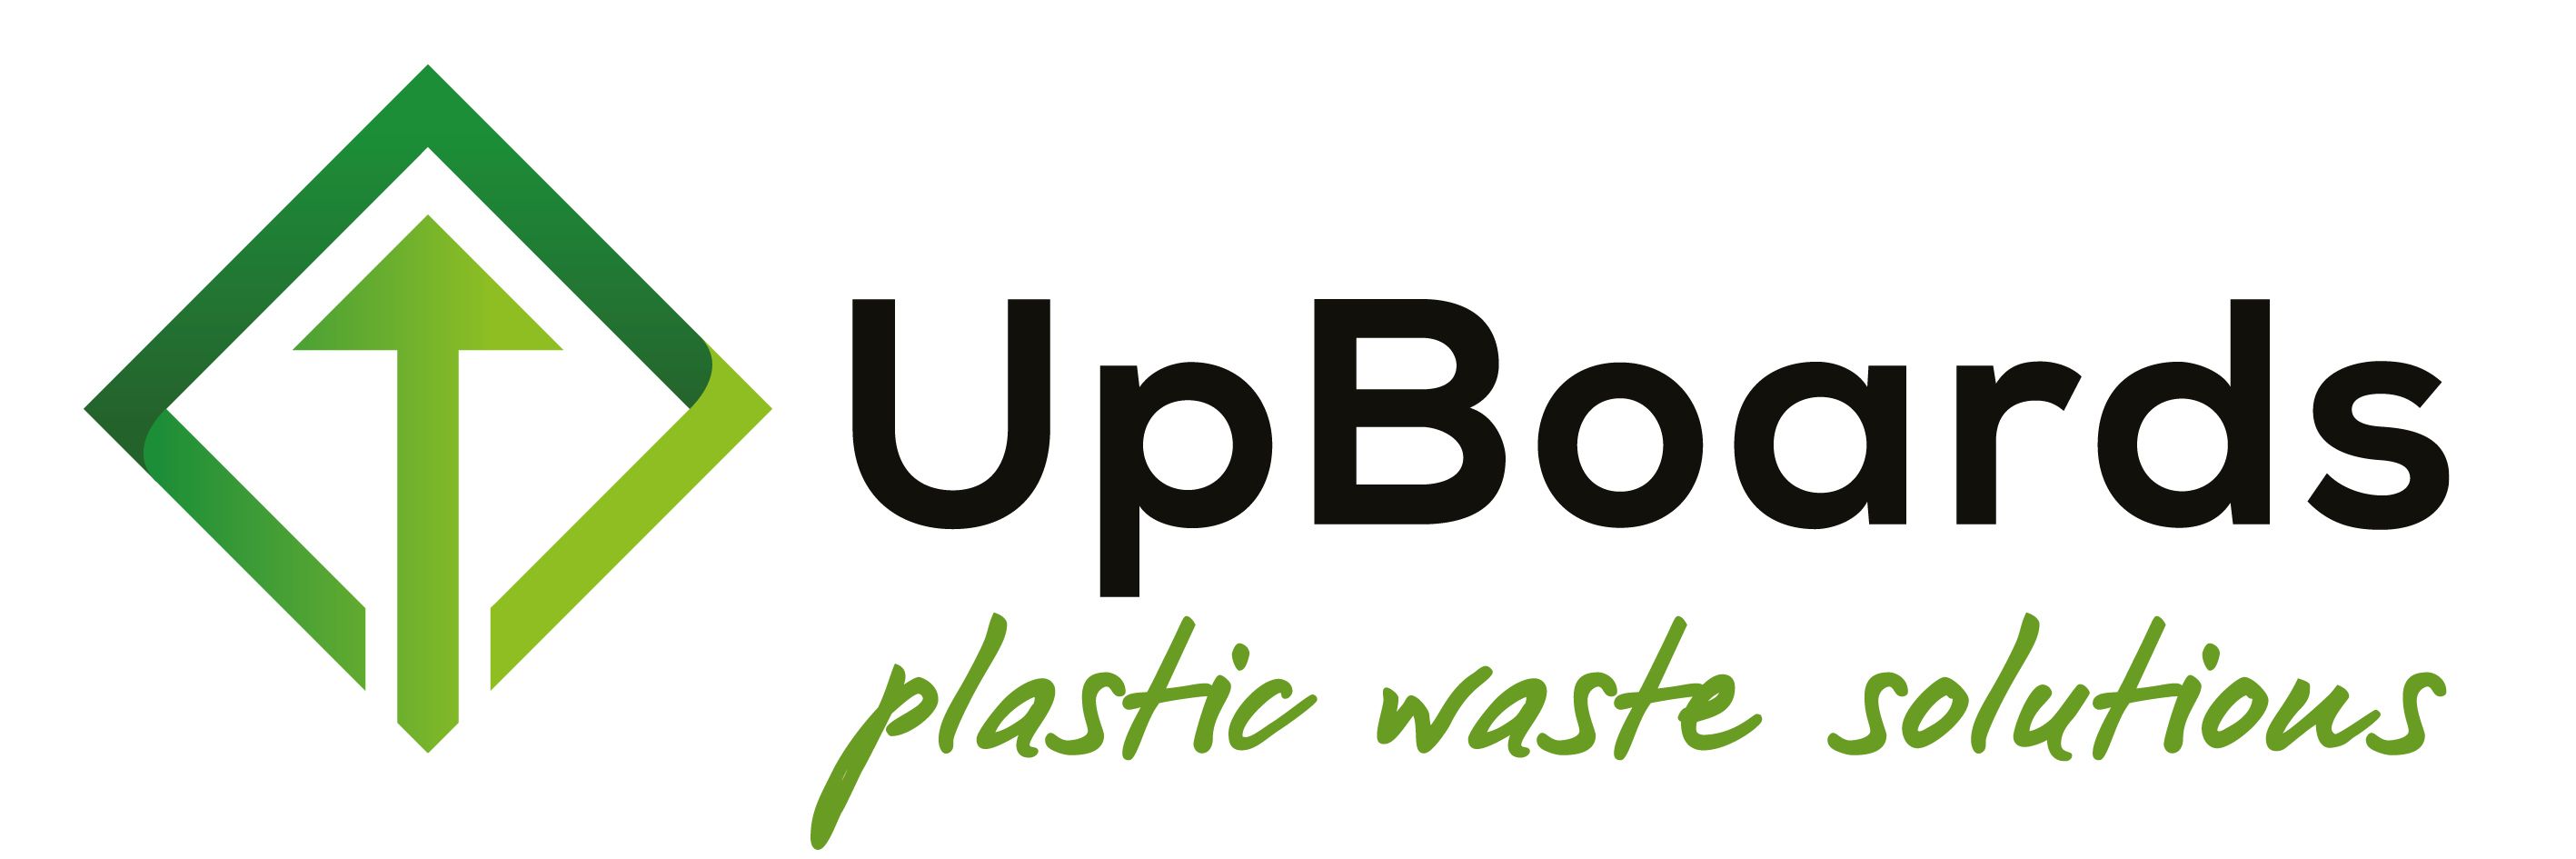 Upboards - recyclierte Kunststoffplatten aus gemischtem Plastikabfall